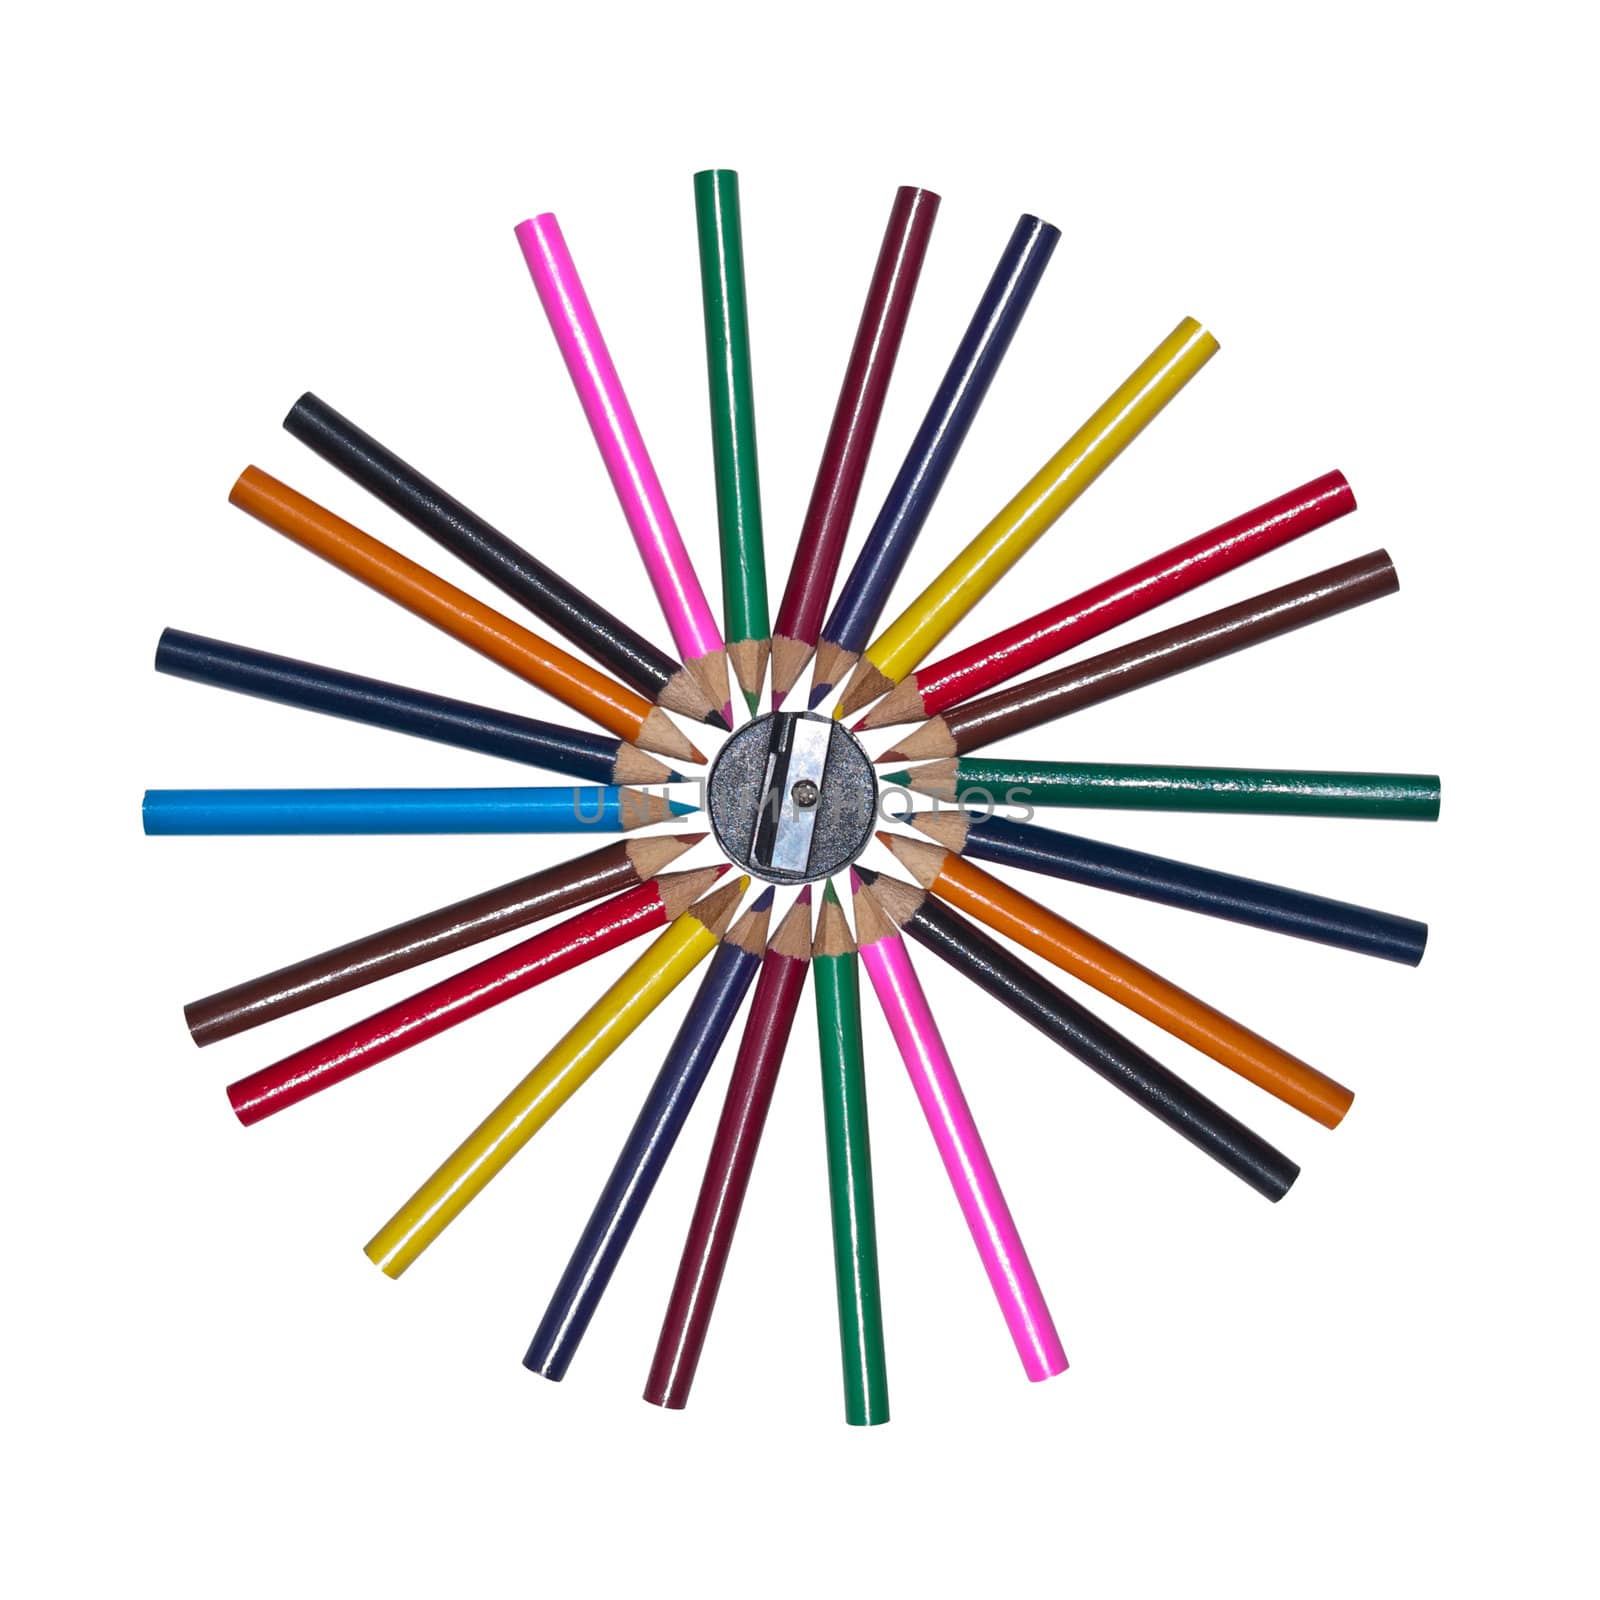 Circle of color pencils encircle the sharpener